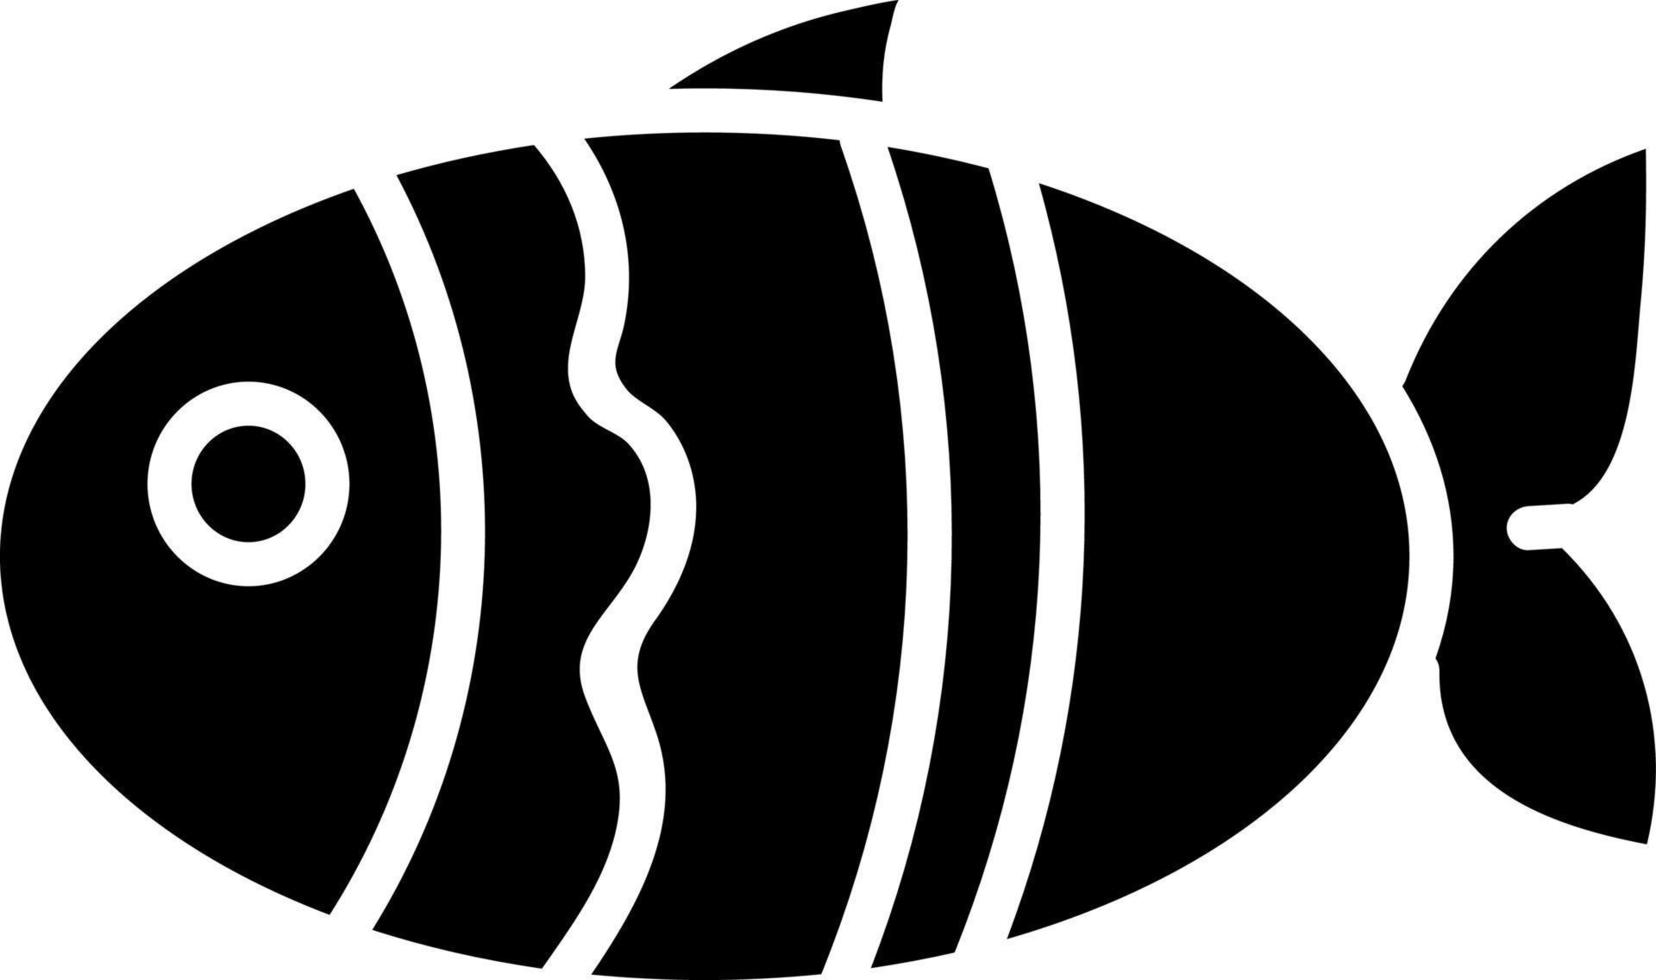 pescado con rayas, ilustración, vector sobre fondo blanco.